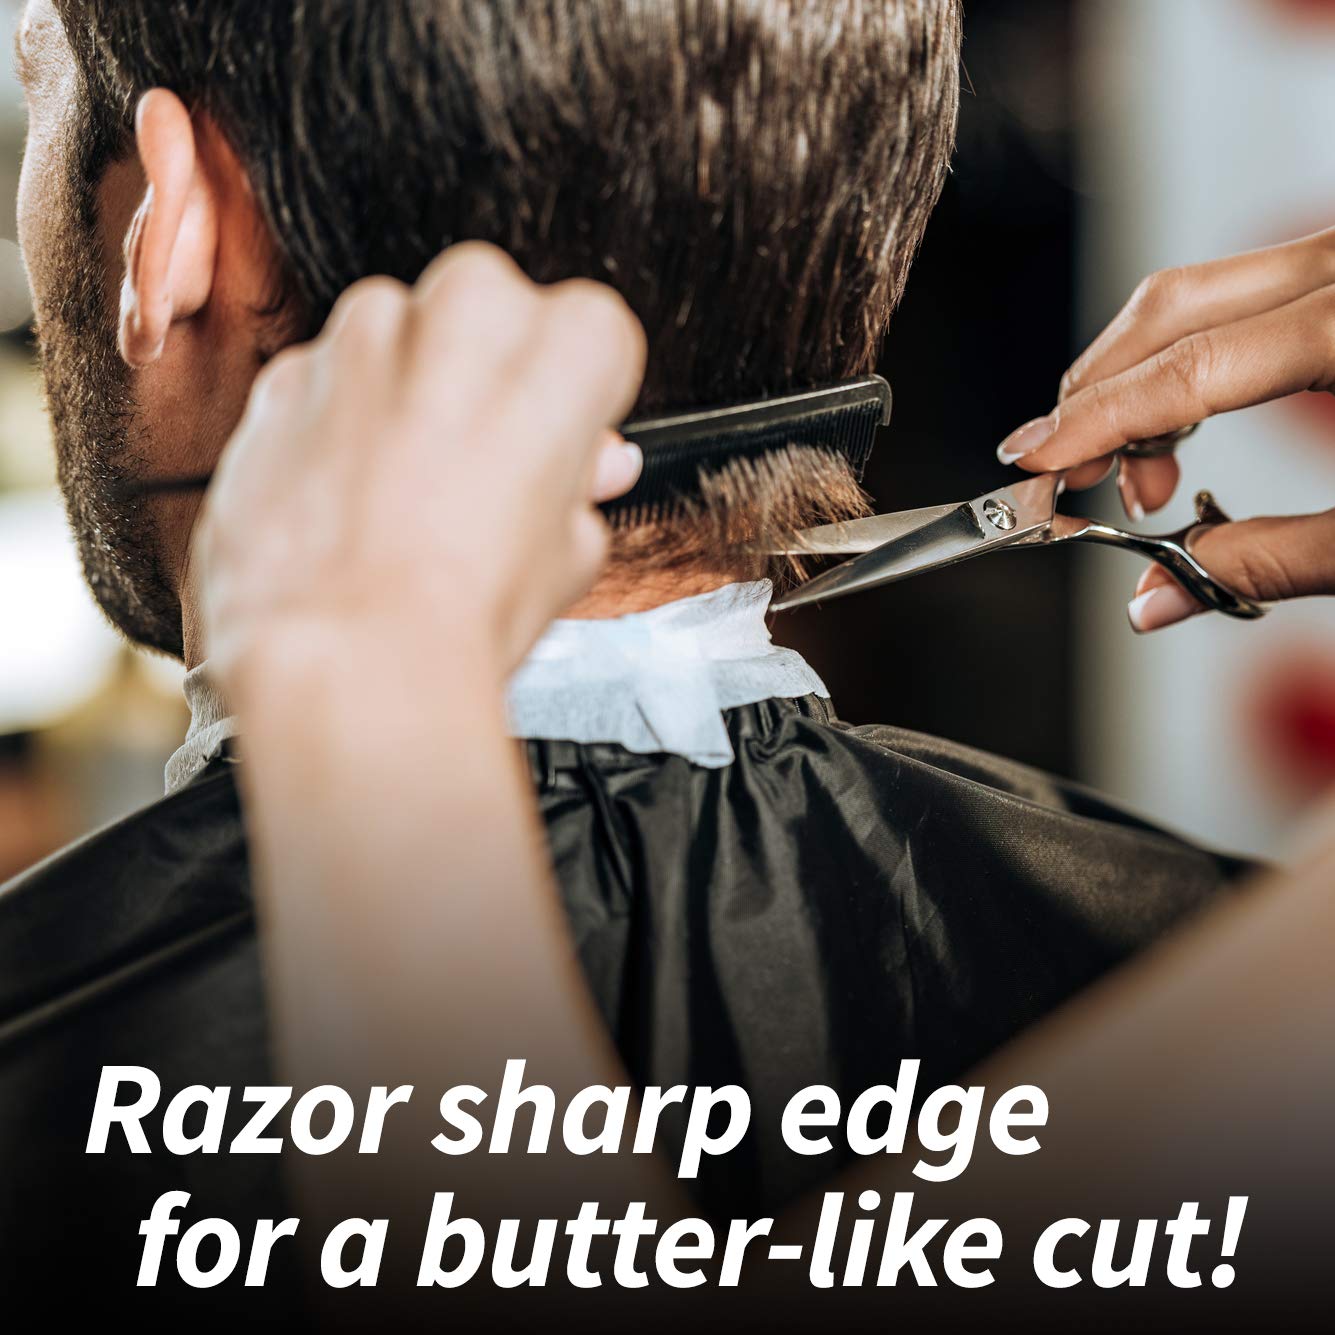 JW CRX Professional Hair Cutting Scissors & Thinning Shear Set with Comb Set - Razor Edge Series